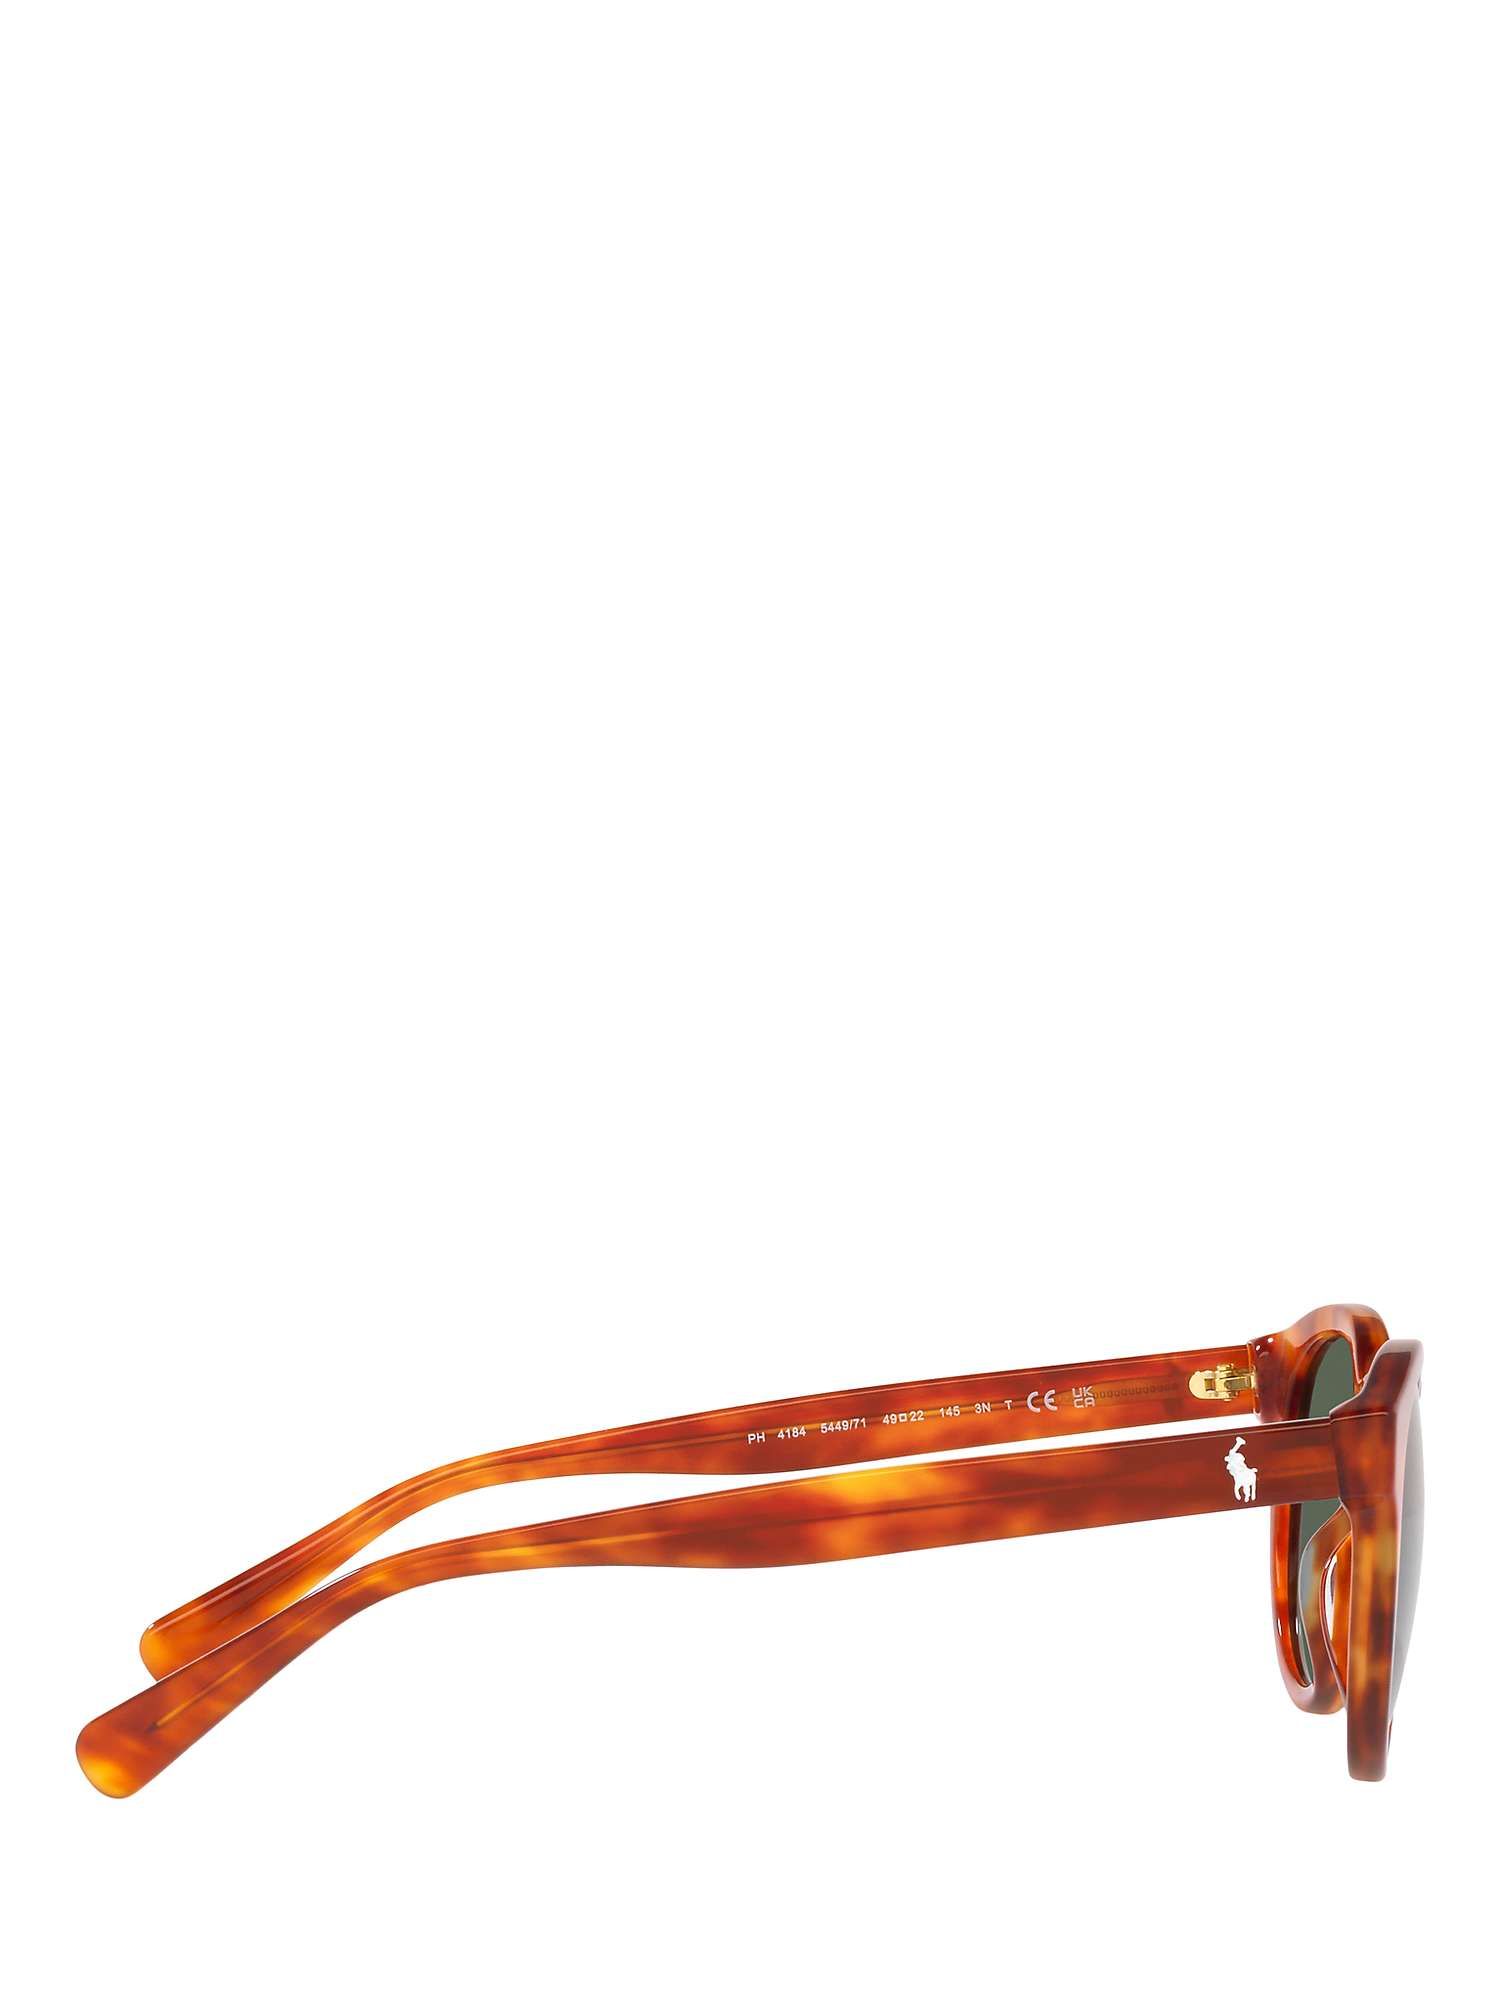 Buy Ralph PH4184 Men's Round Shape Sunglasses Online at johnlewis.com